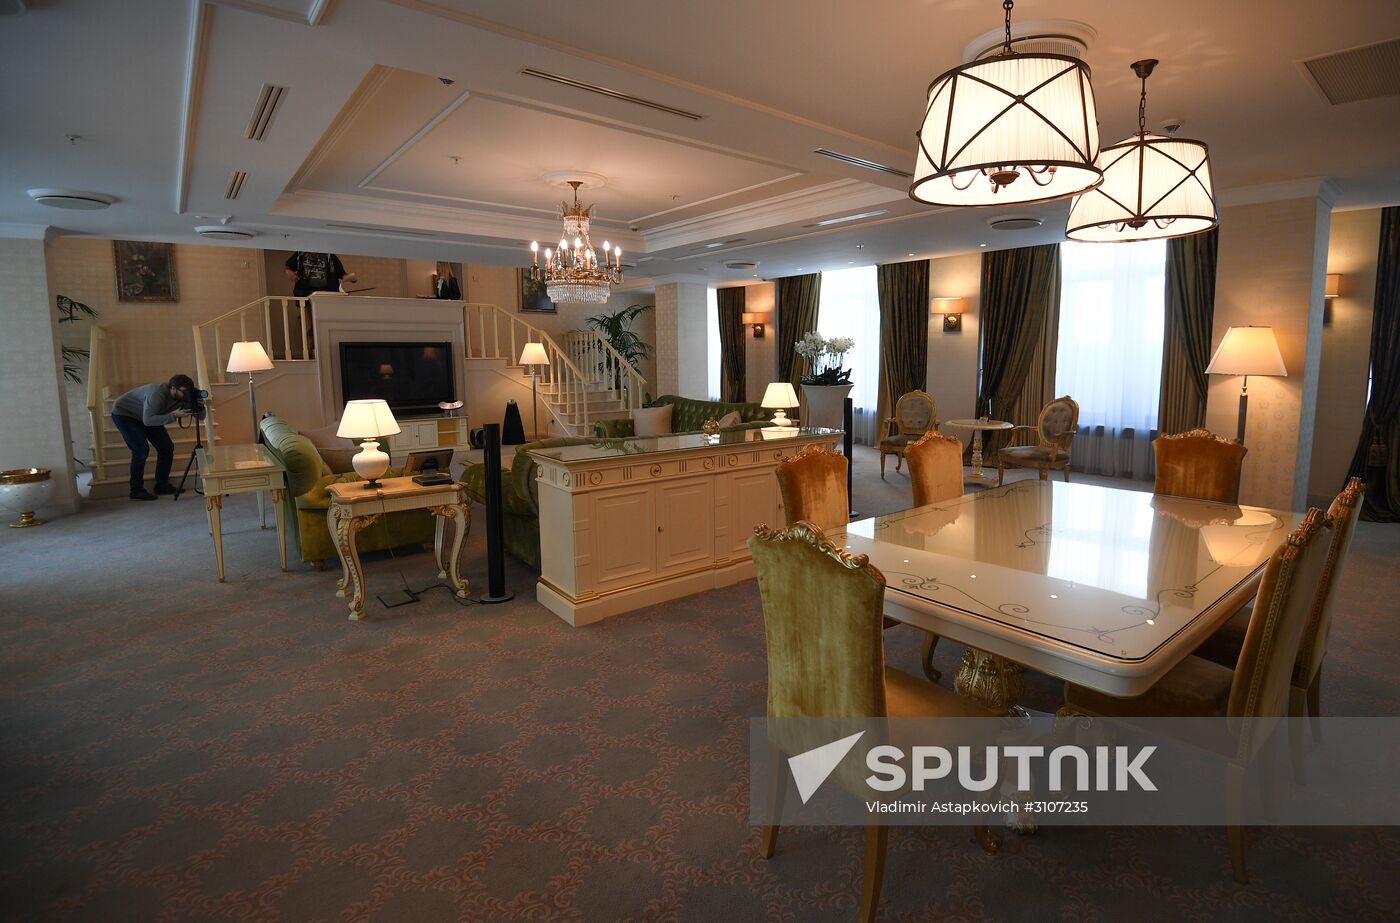 Ukraina Hotel ahead of its 60th anniversary